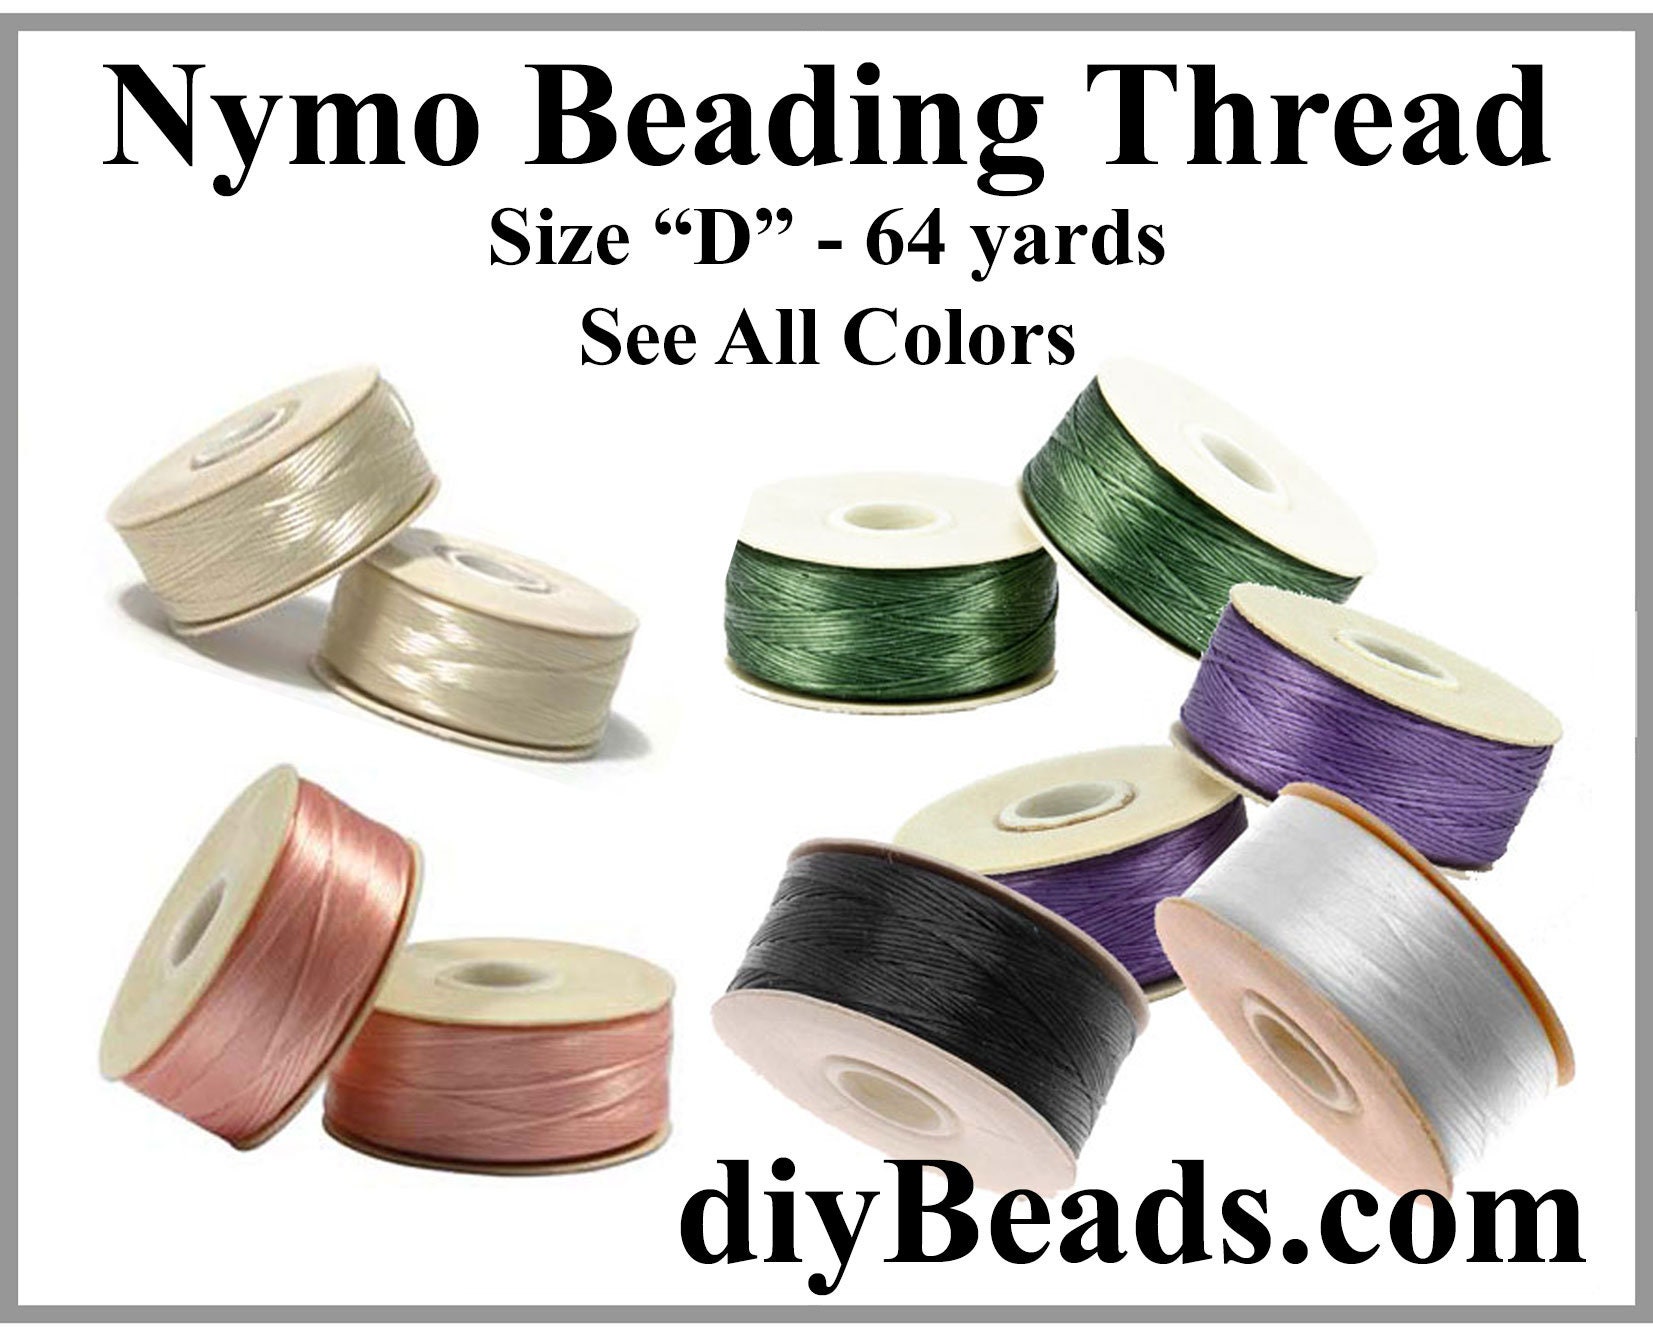  Nymo Nylon Beading Thread Size D for Delica Beads